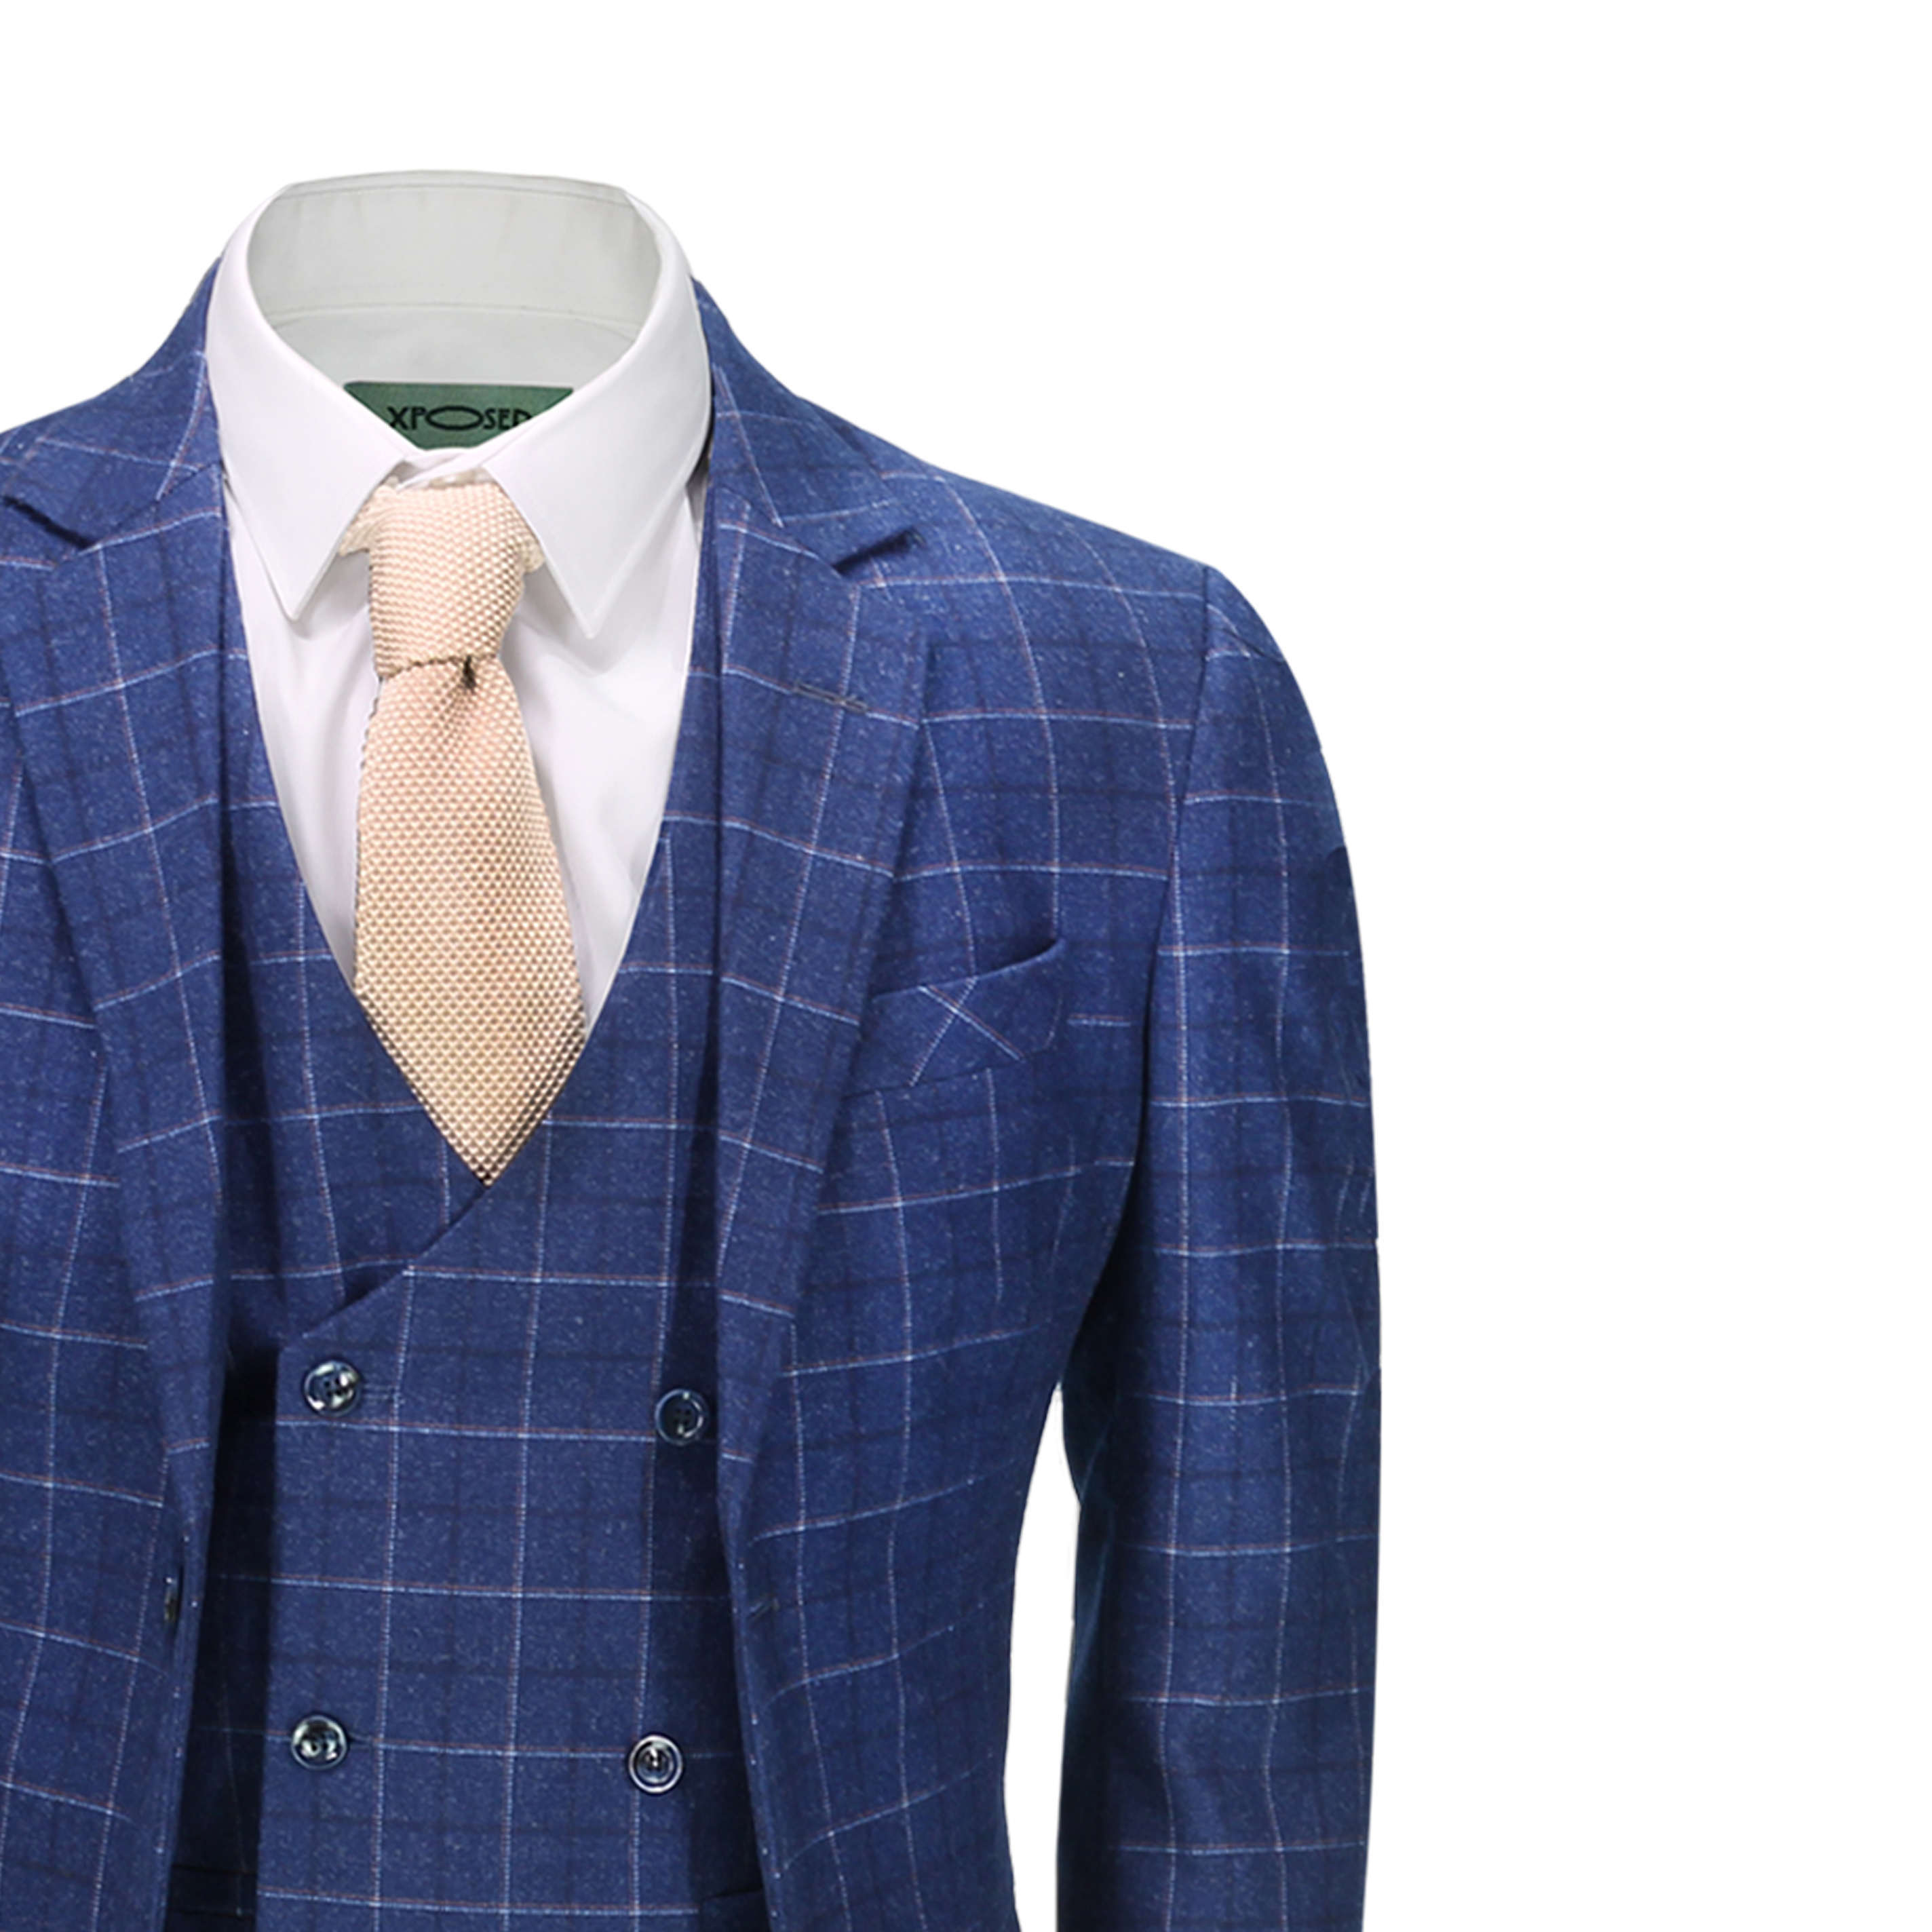 Mens 3 Piece Suit Blue Check on Navy Vintage Retro Smart Tailored Fit UK Size 